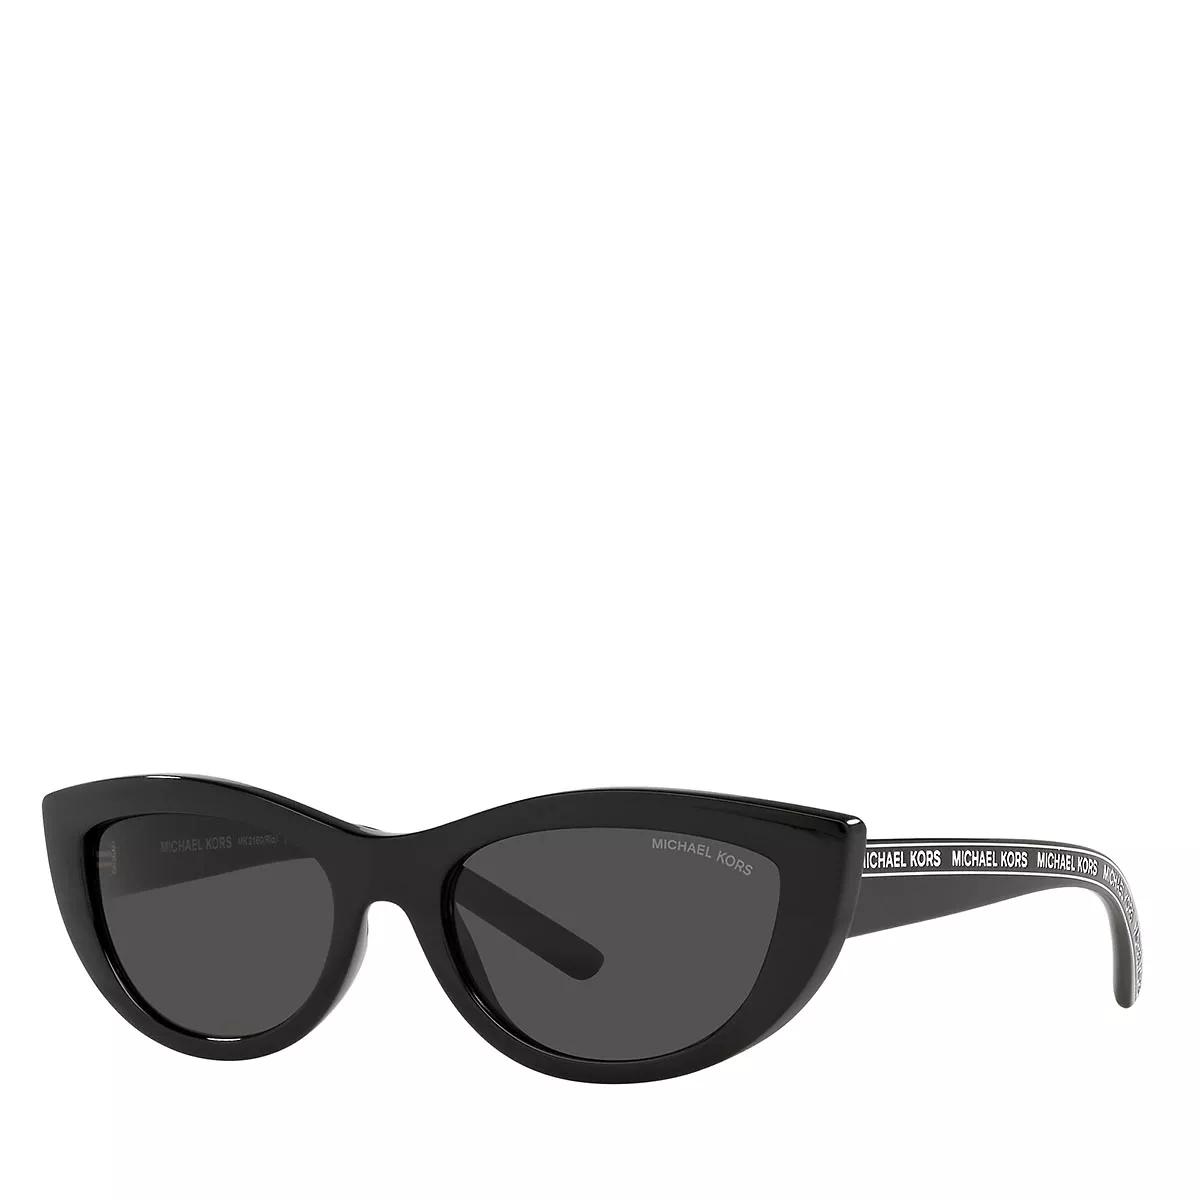 Michael Kors Sunglasses 0mk2160 Black Sonnenbrille Fashionette